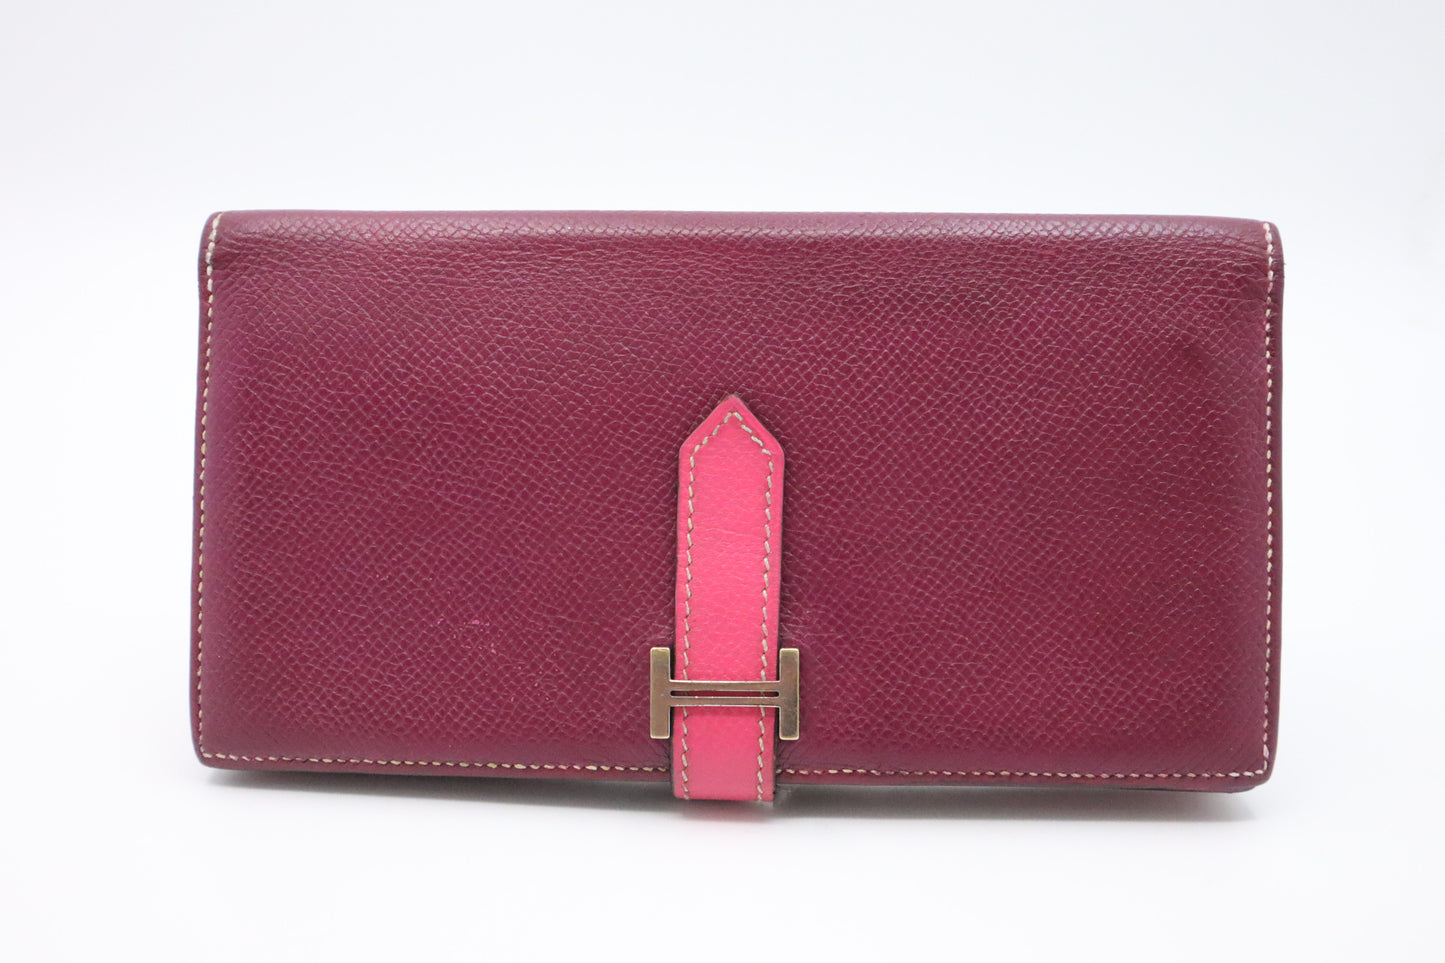 Hermes Bearn Soufflet Wallet in Burgundy Leather